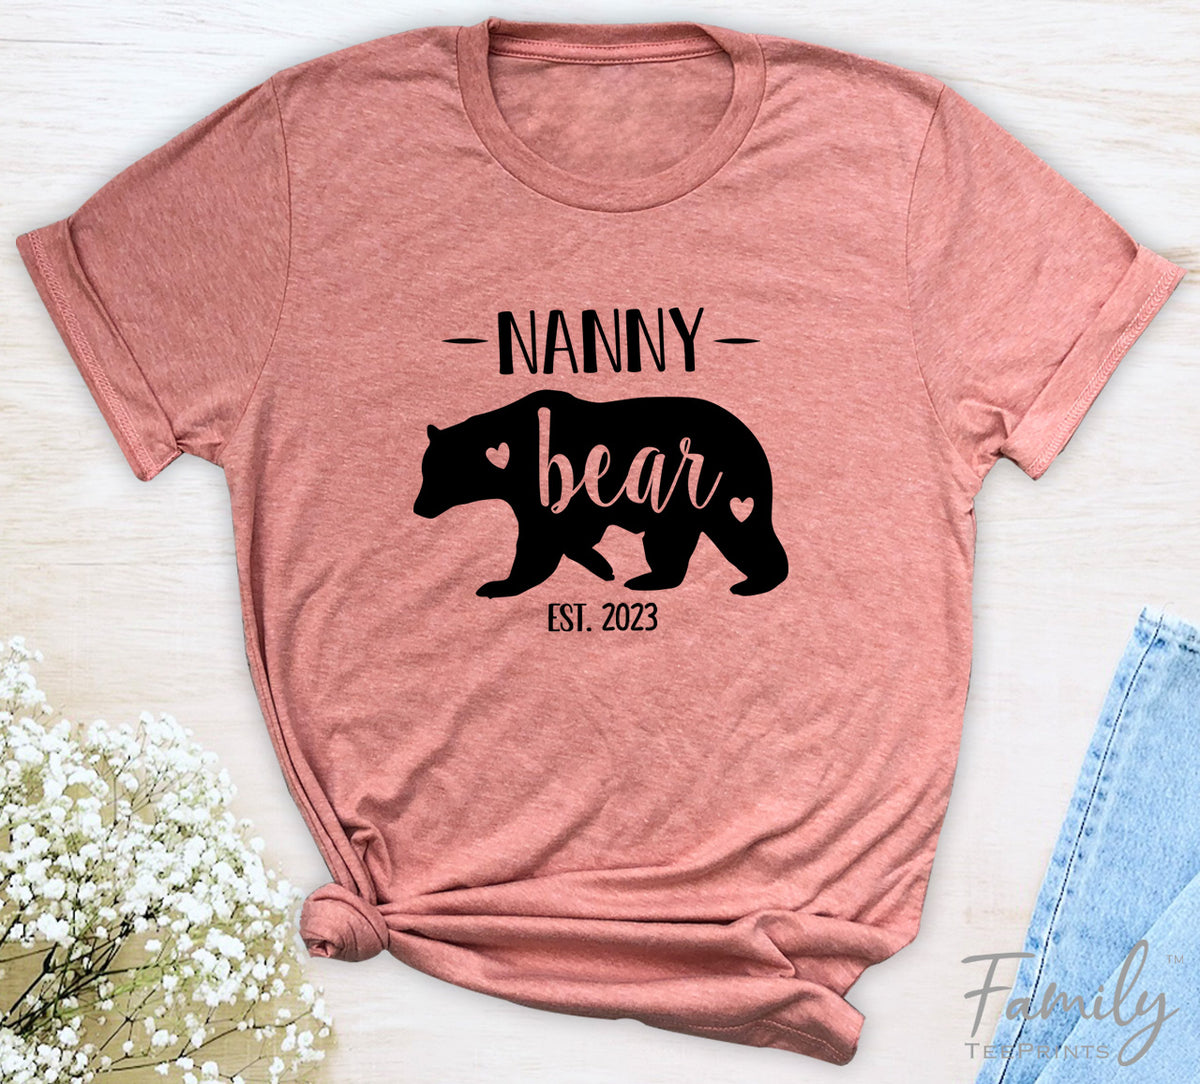 Nanny Bear Est. 2023 - Unisex T-shirt - Nanny Shirt - Gift For New Nanny